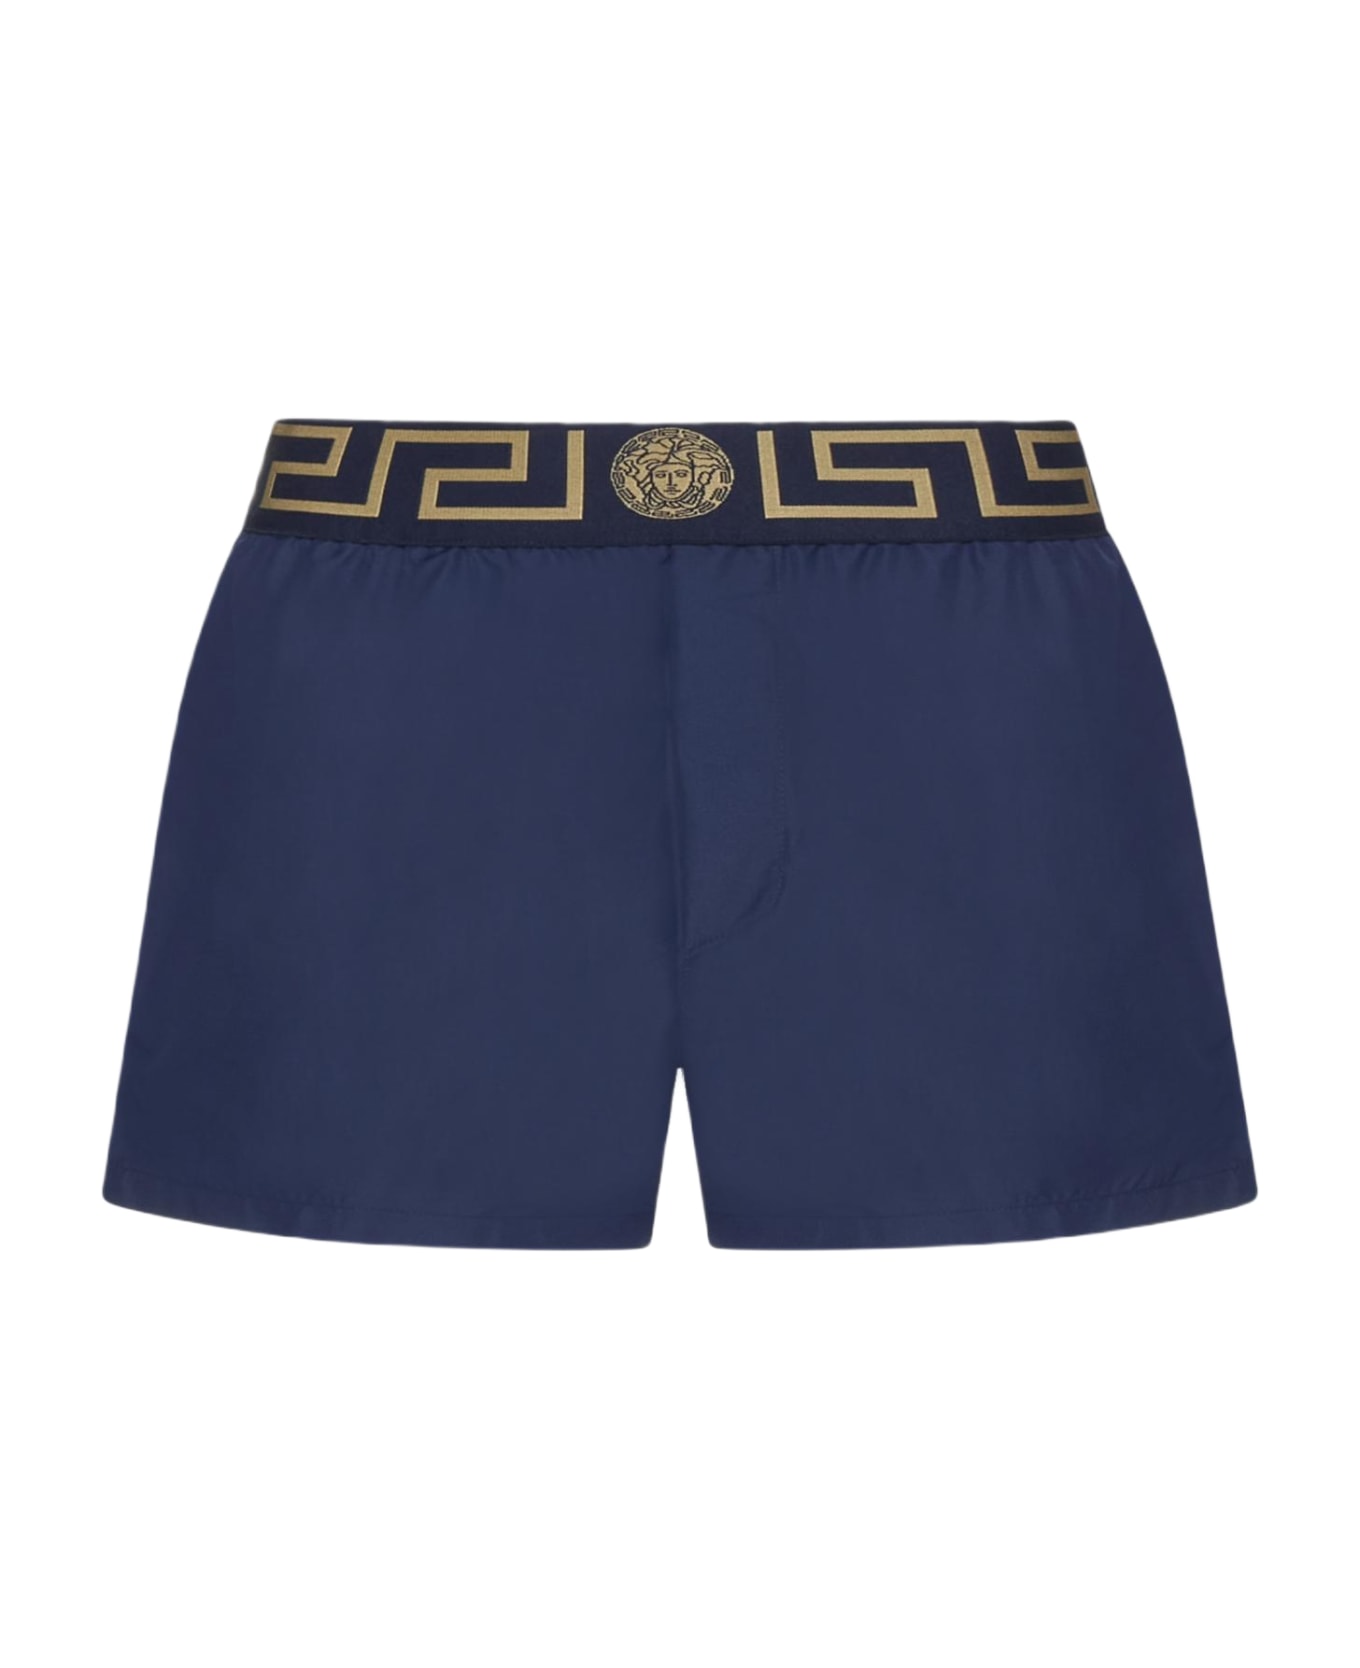 Versace Greca And Medusa Swim Shorts - Blu oro 水着